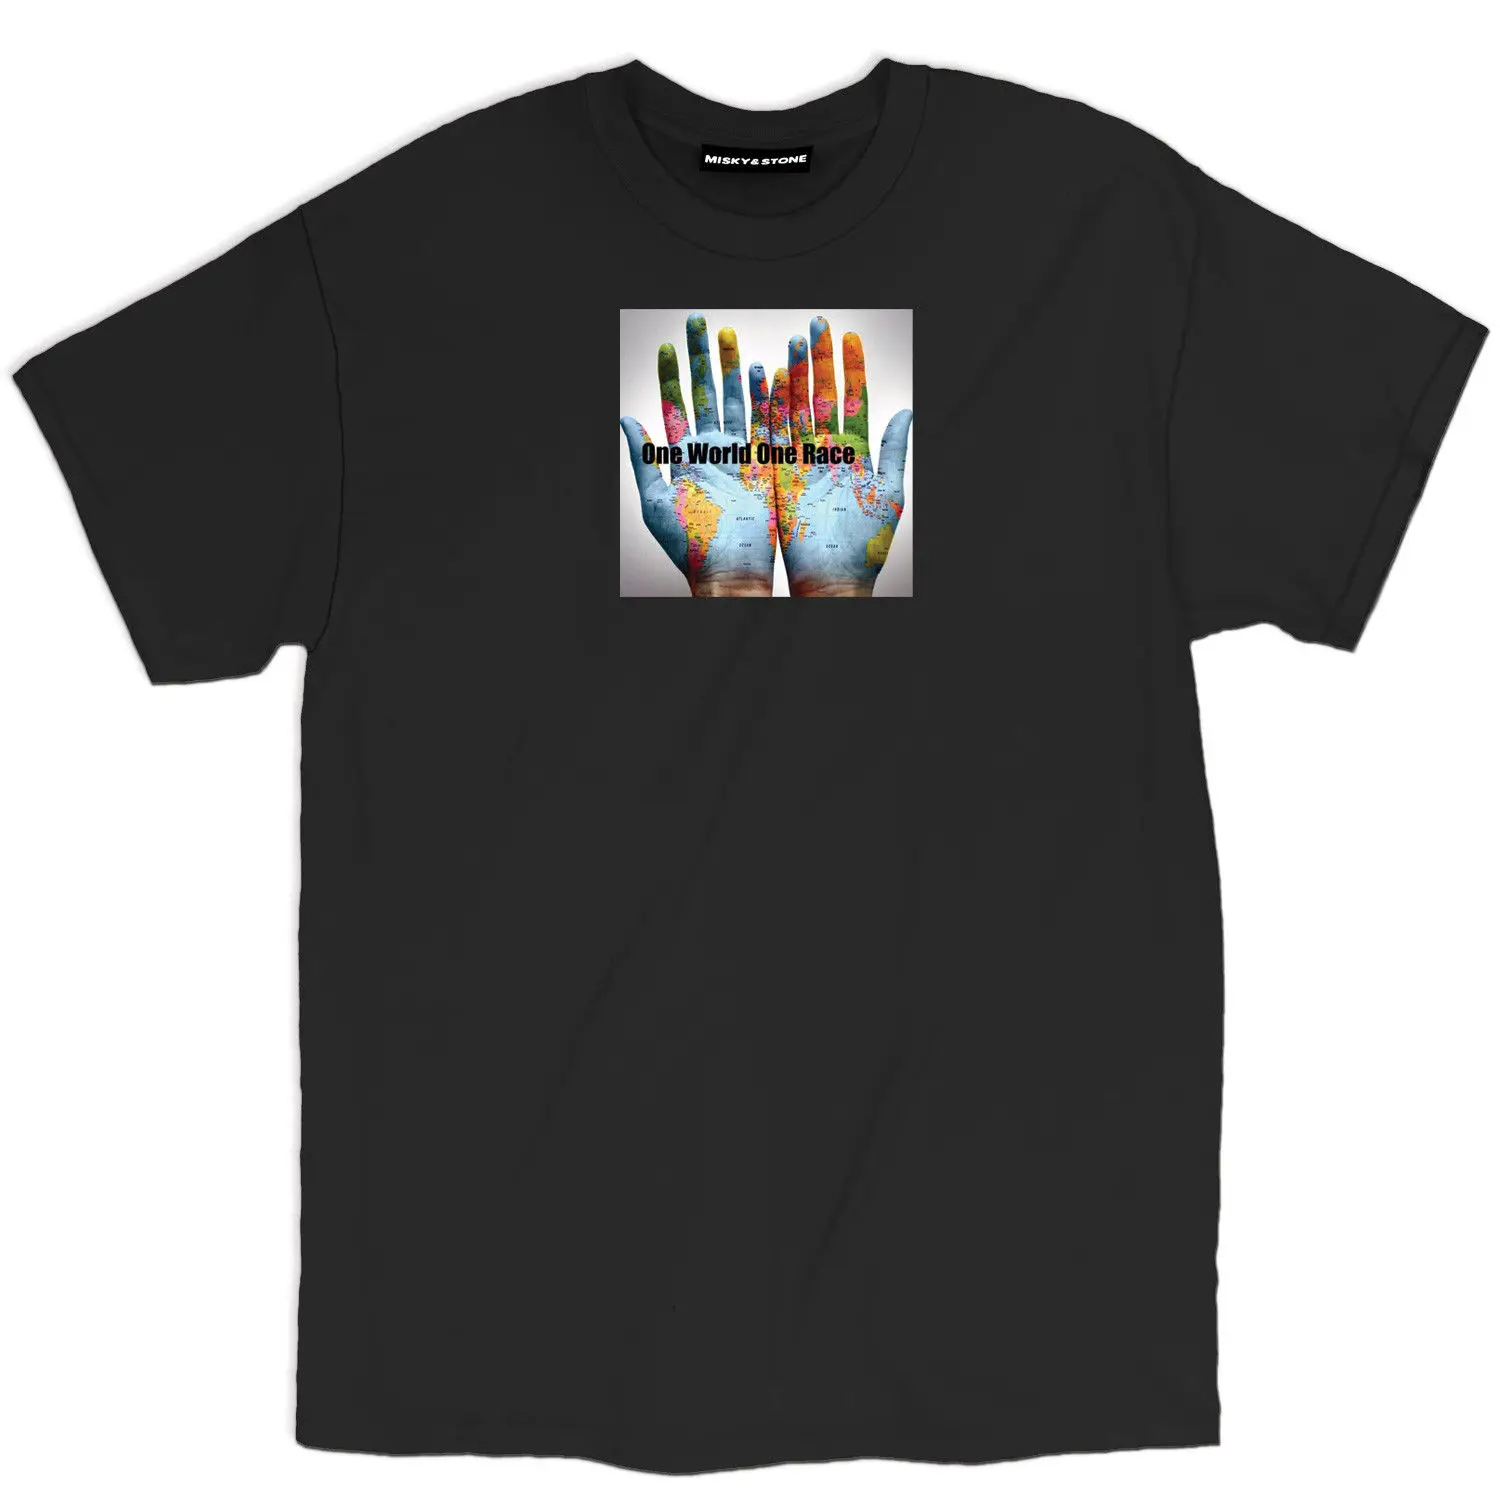 Новинка 2019 года, летняя Мужская модная брендовая футболка с принтом «Novetly», «One World One Race Global», «Равенство для всех», крутые футболки